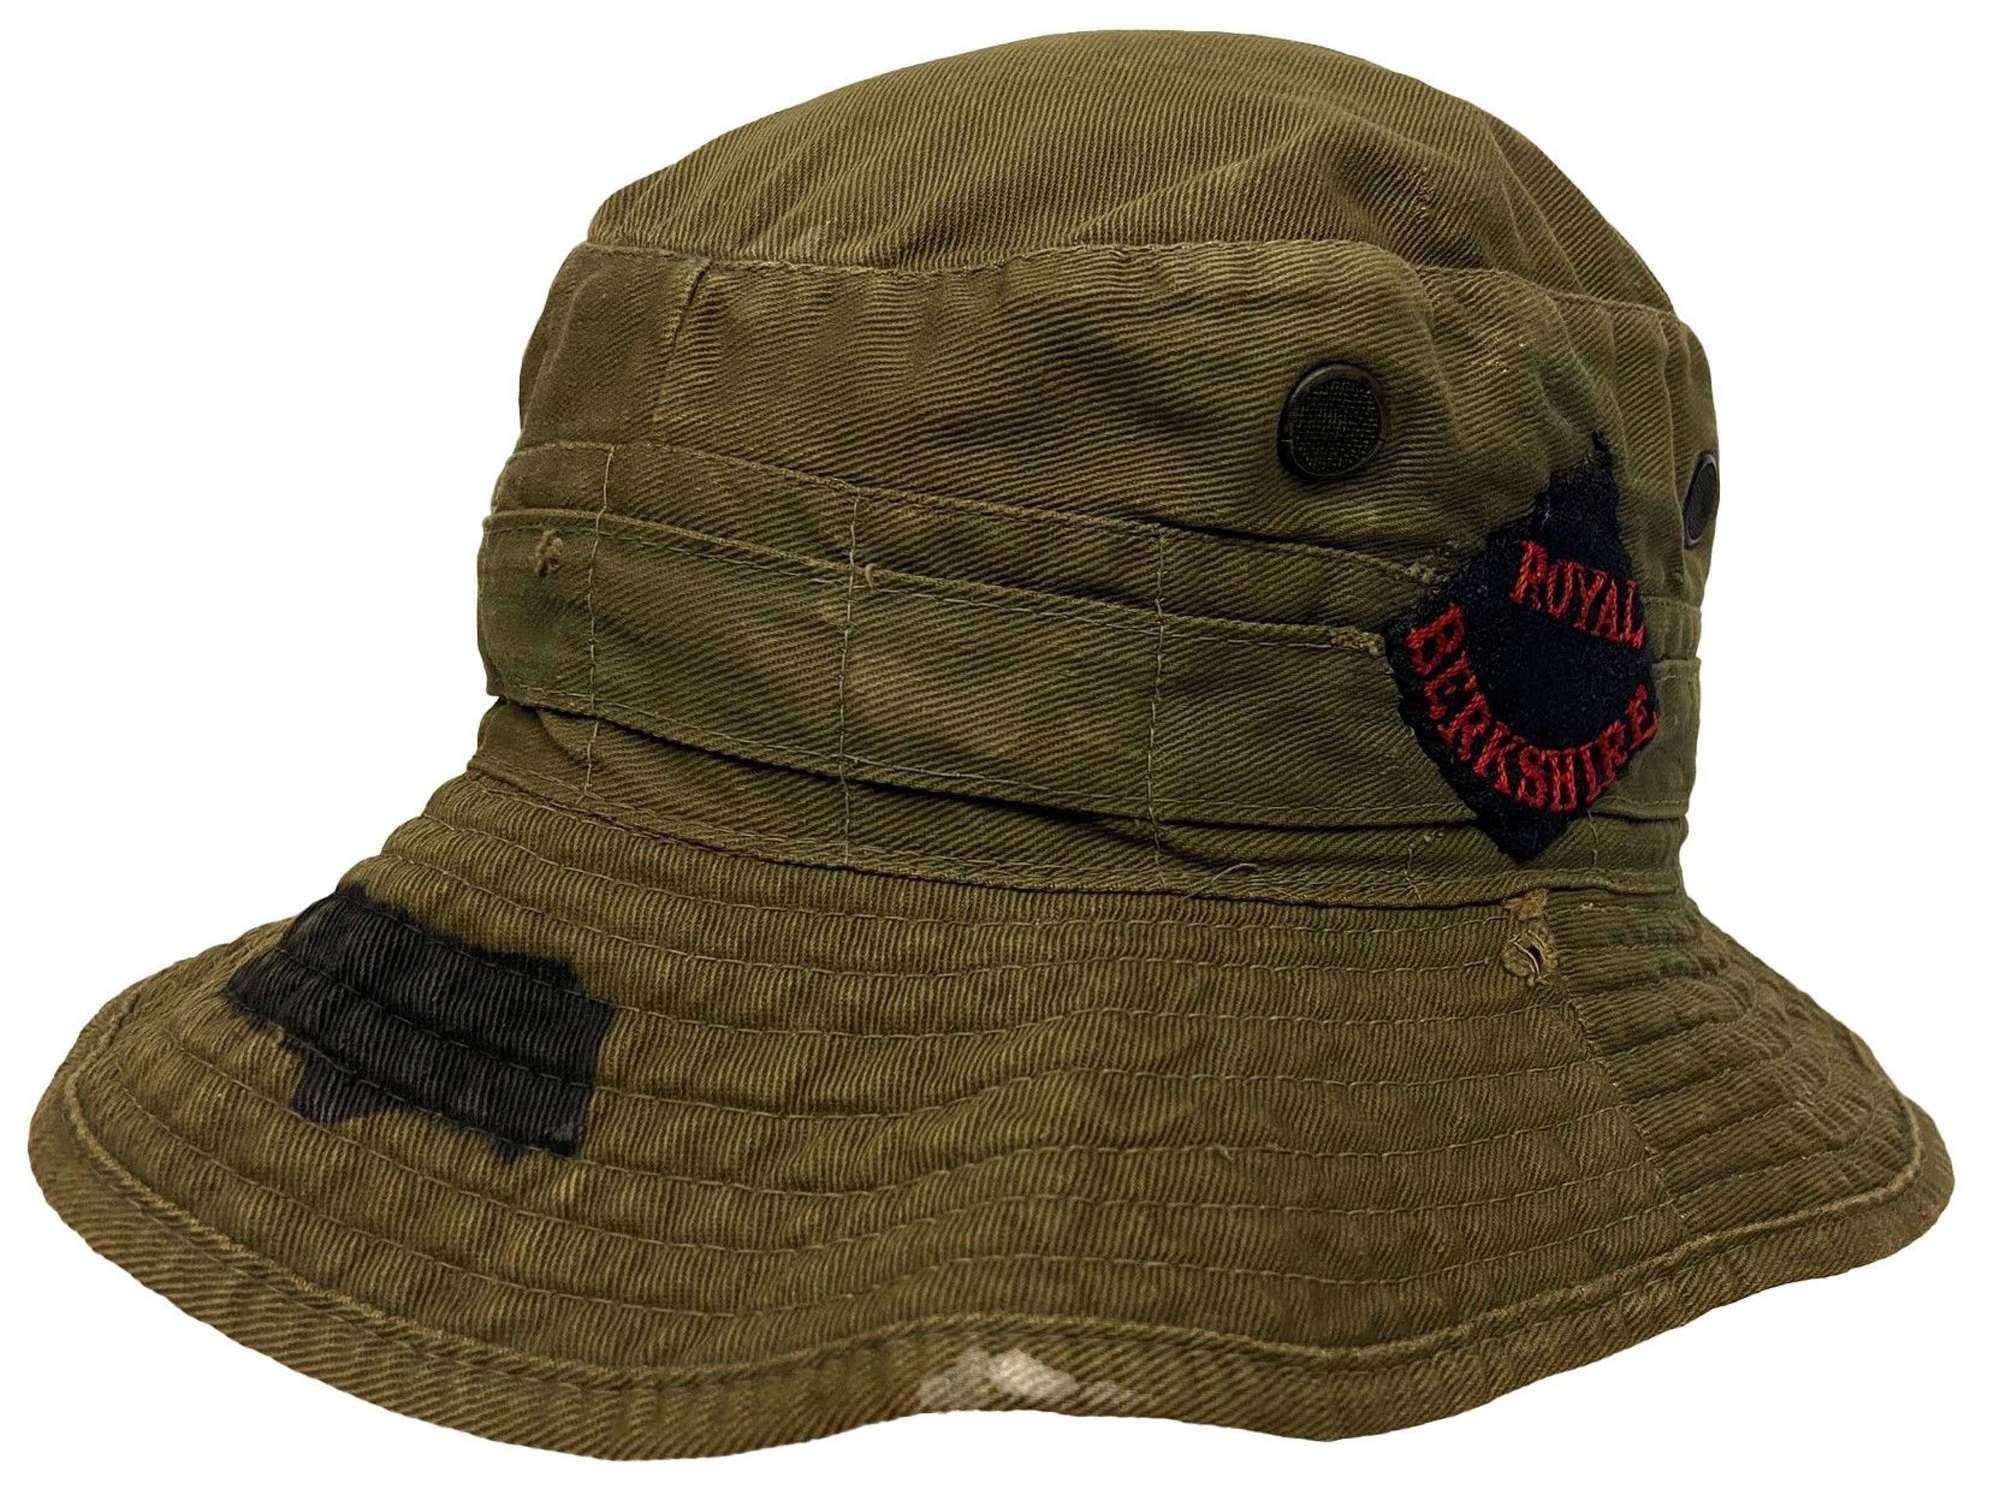 Original 1945 Dated British Army Jungle Service Hat - Size 7 1/4